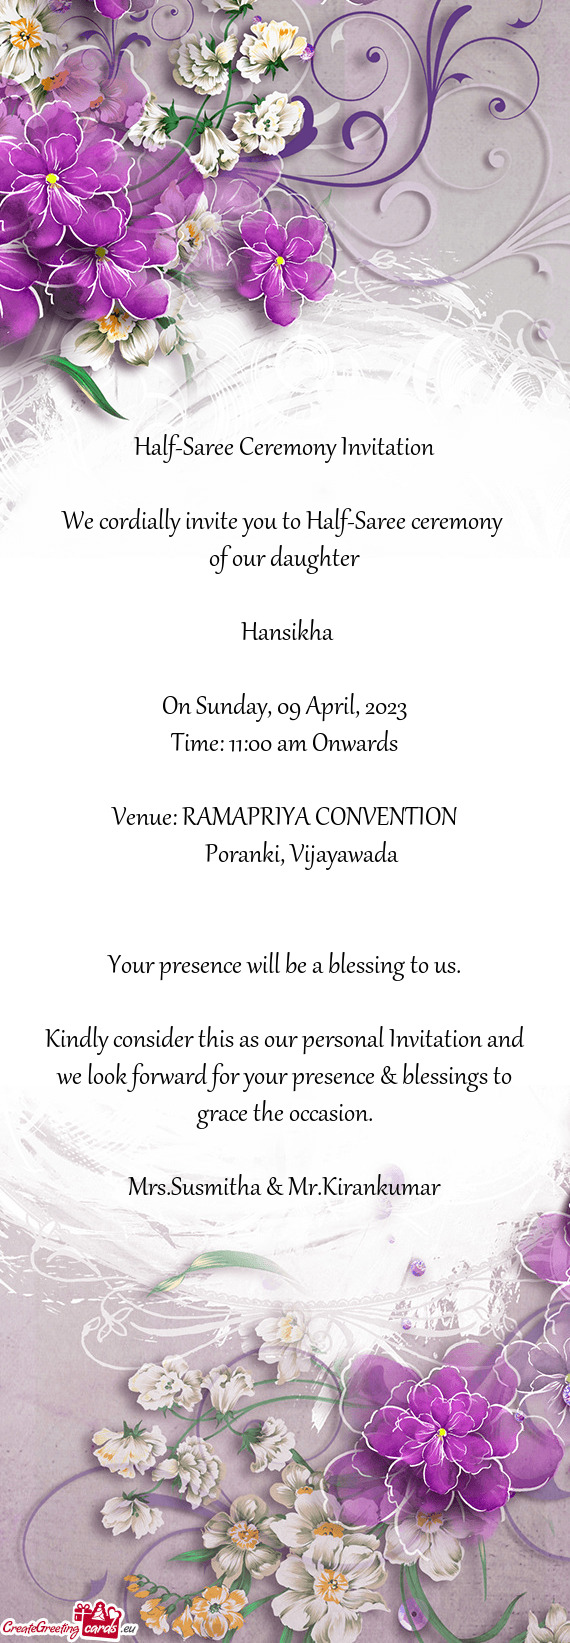 We cordially invite you to Half-Saree ceremony